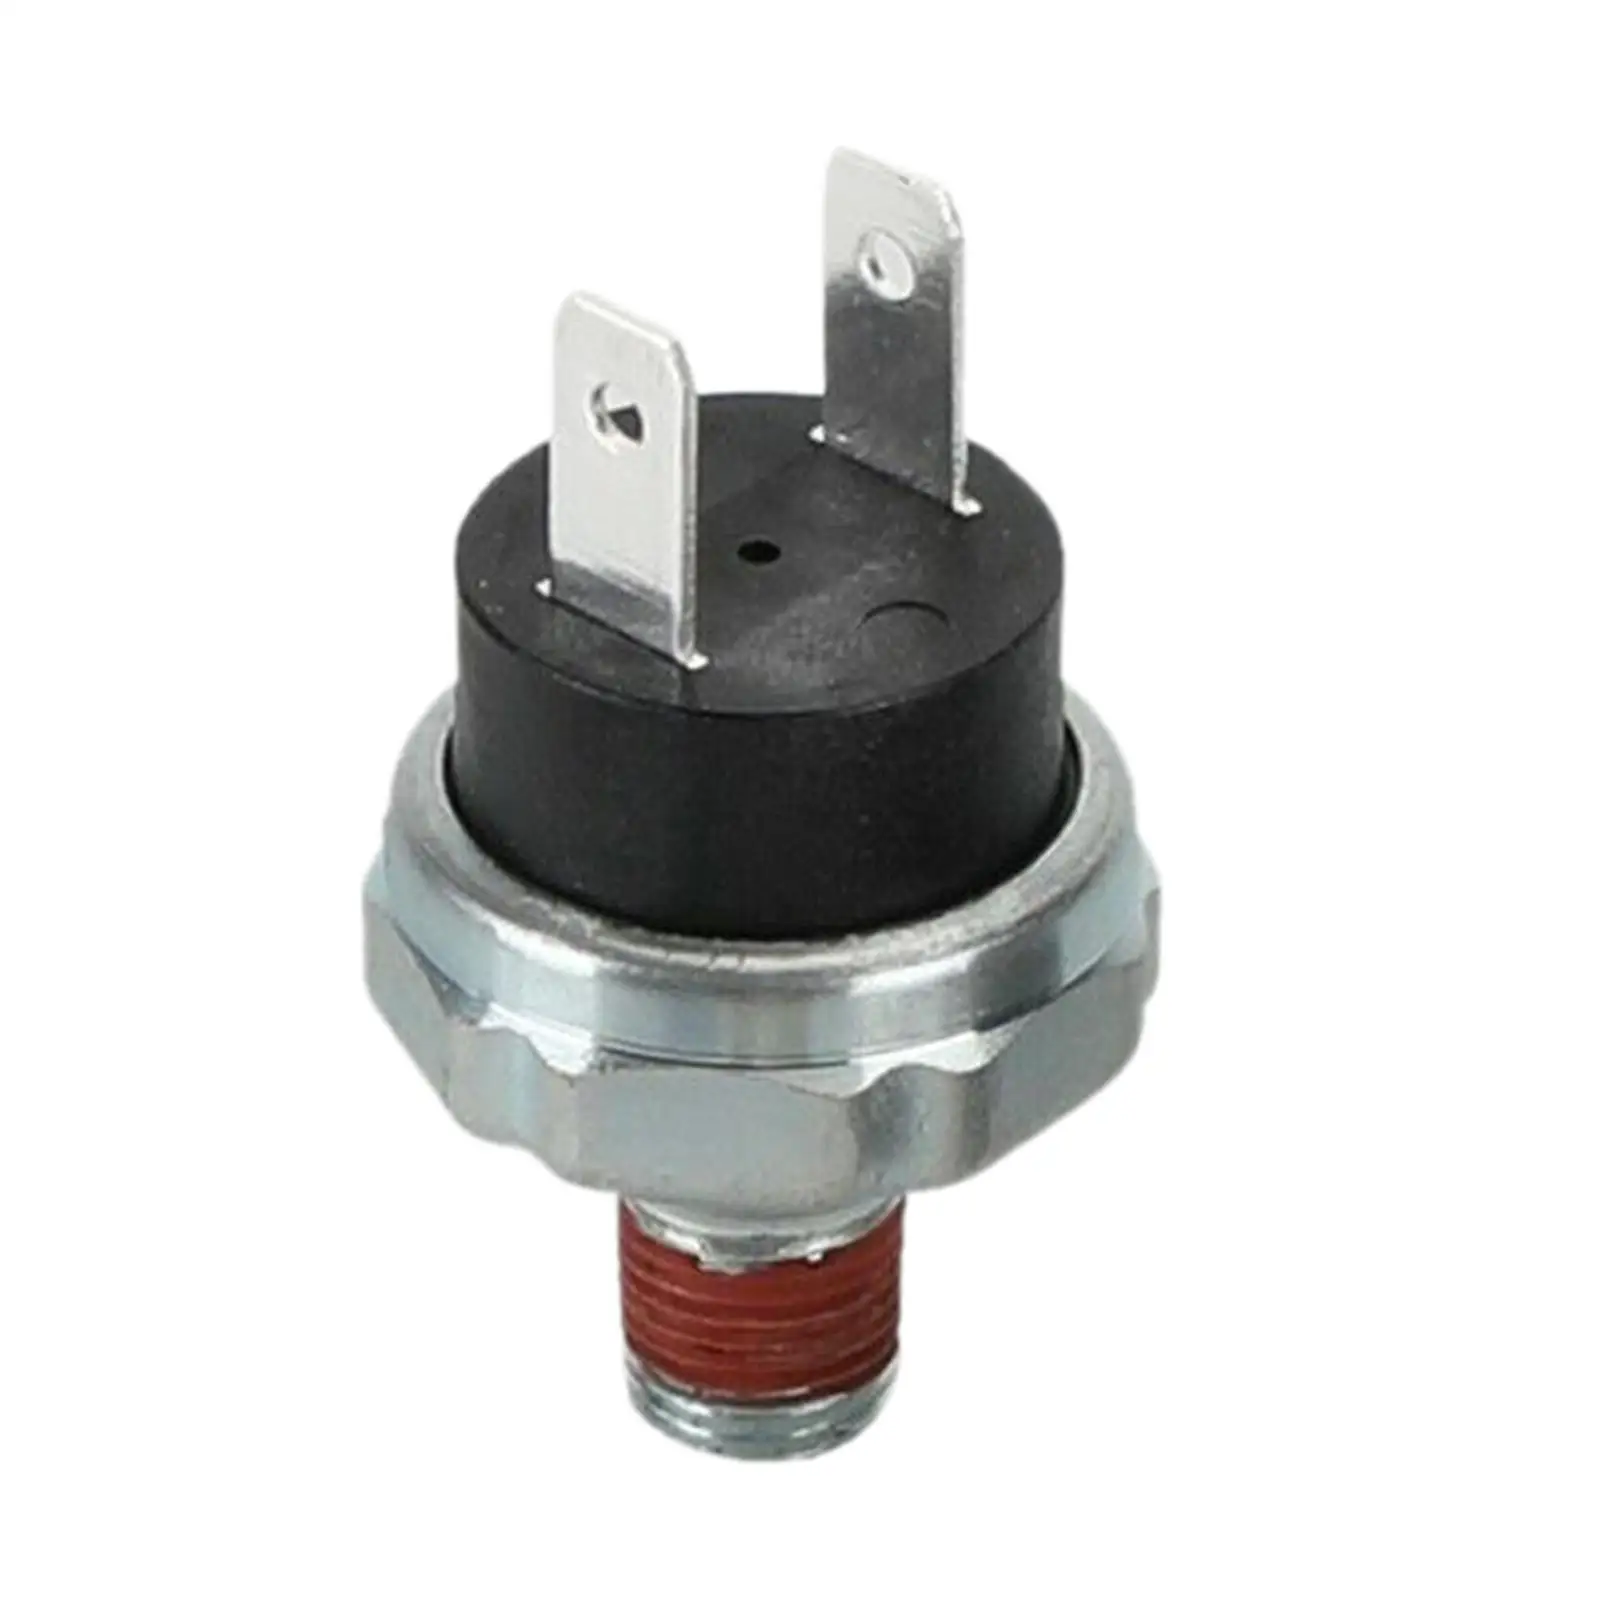 Transmission High Gear Lock Switch Kit S74416AK Lockup Switch Kit Fit for TH 700-R4 4L60 200-4R